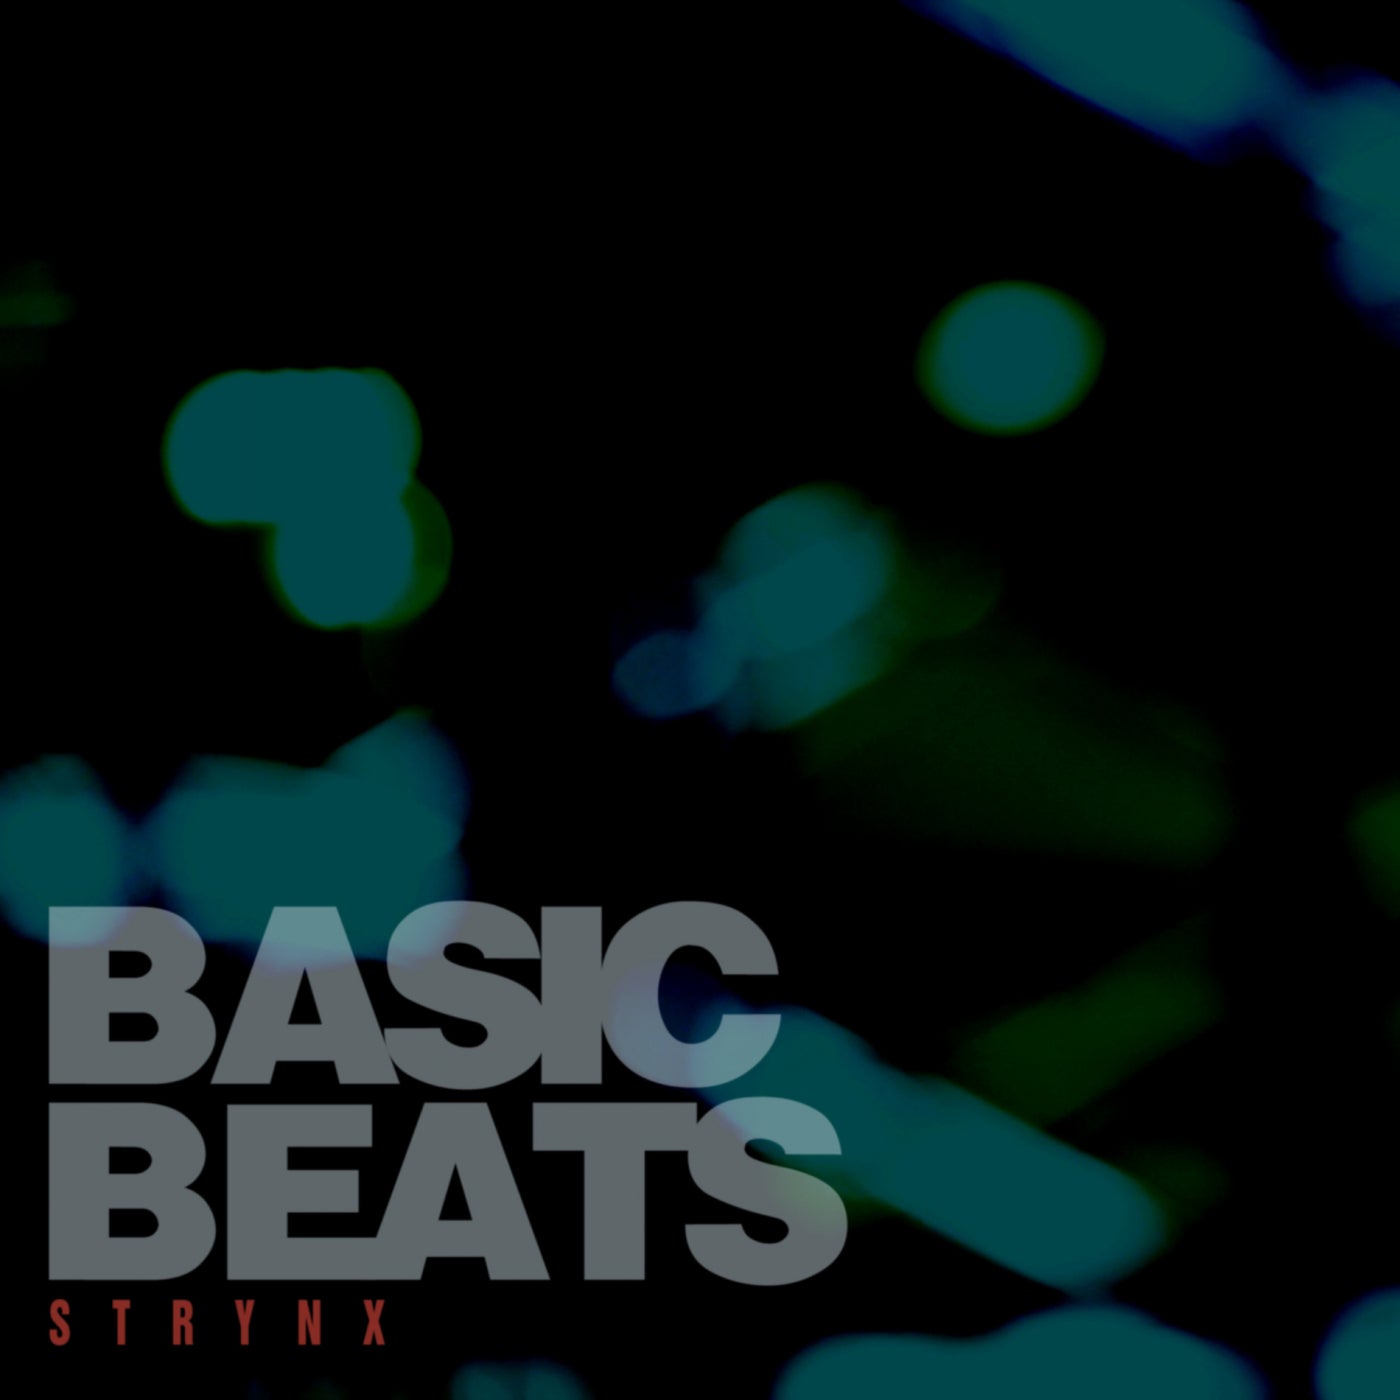 Basic Beats